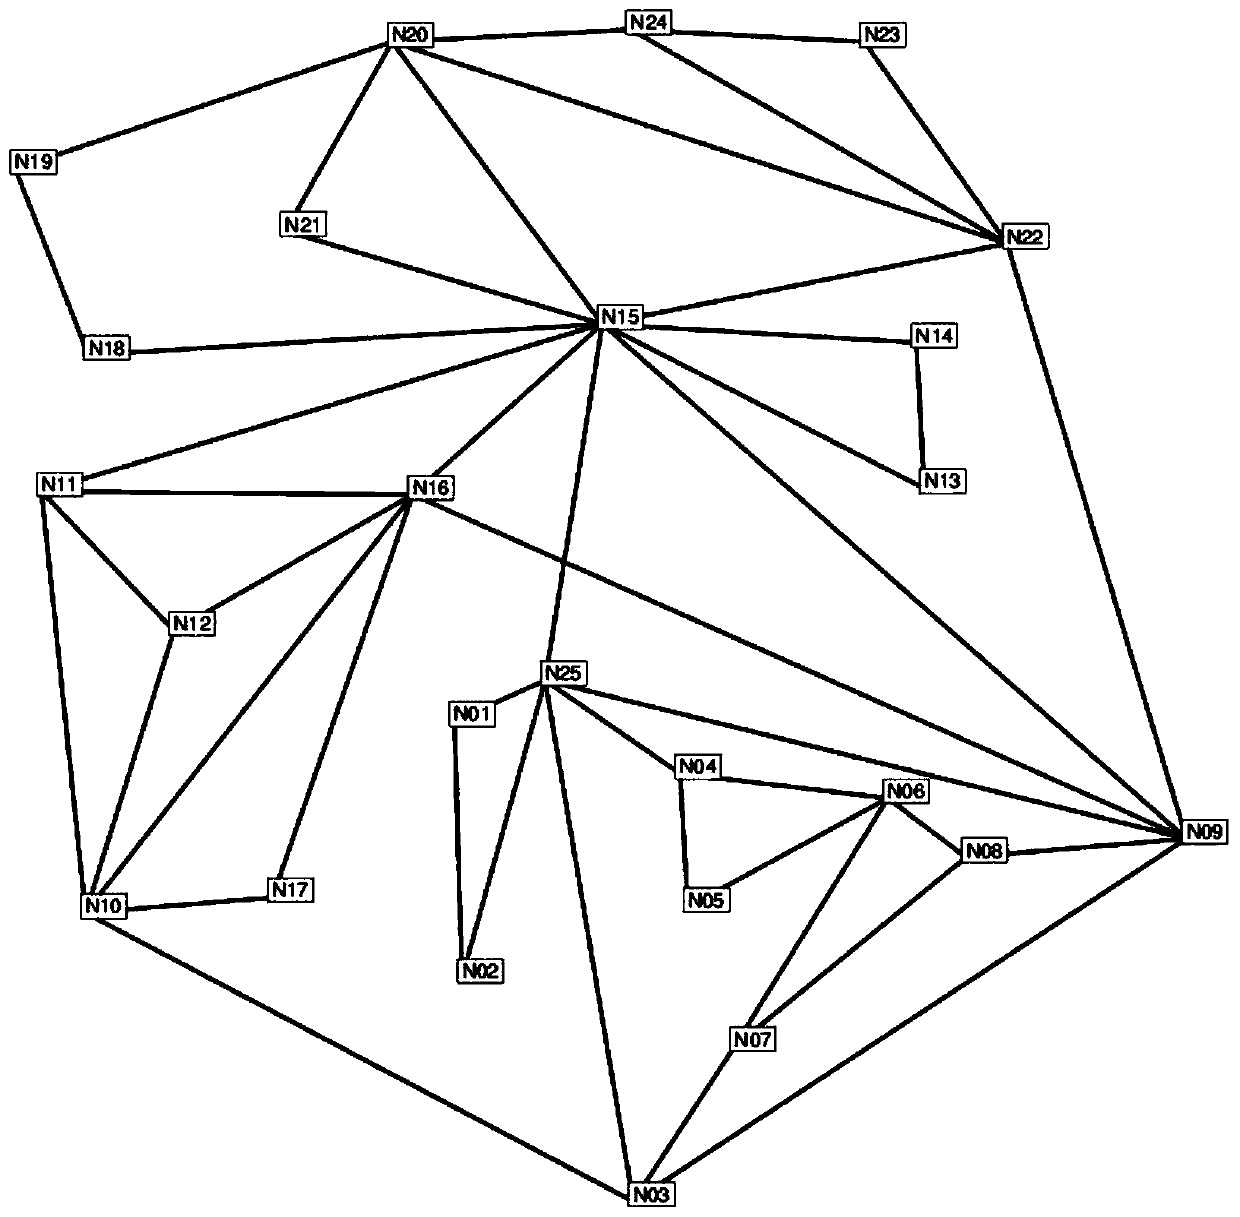 Virtual Network Function Deployment Method Based on Gray Wolf Algorithm